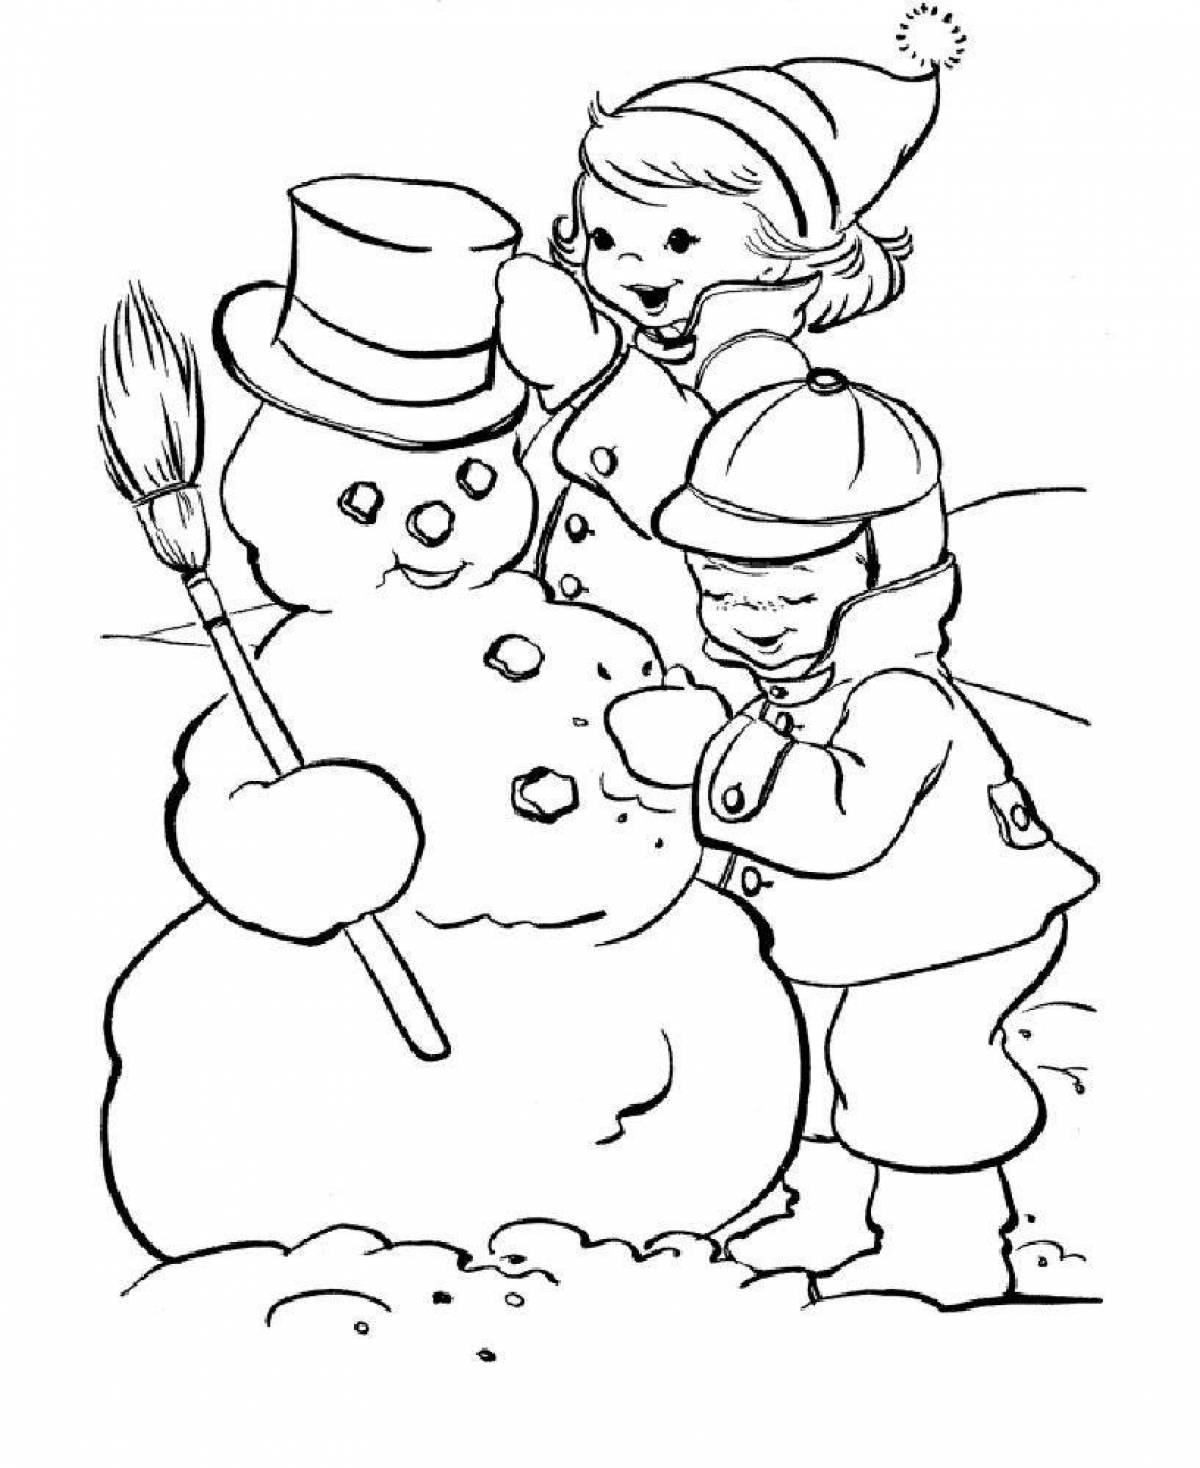 Children making a snowman #8